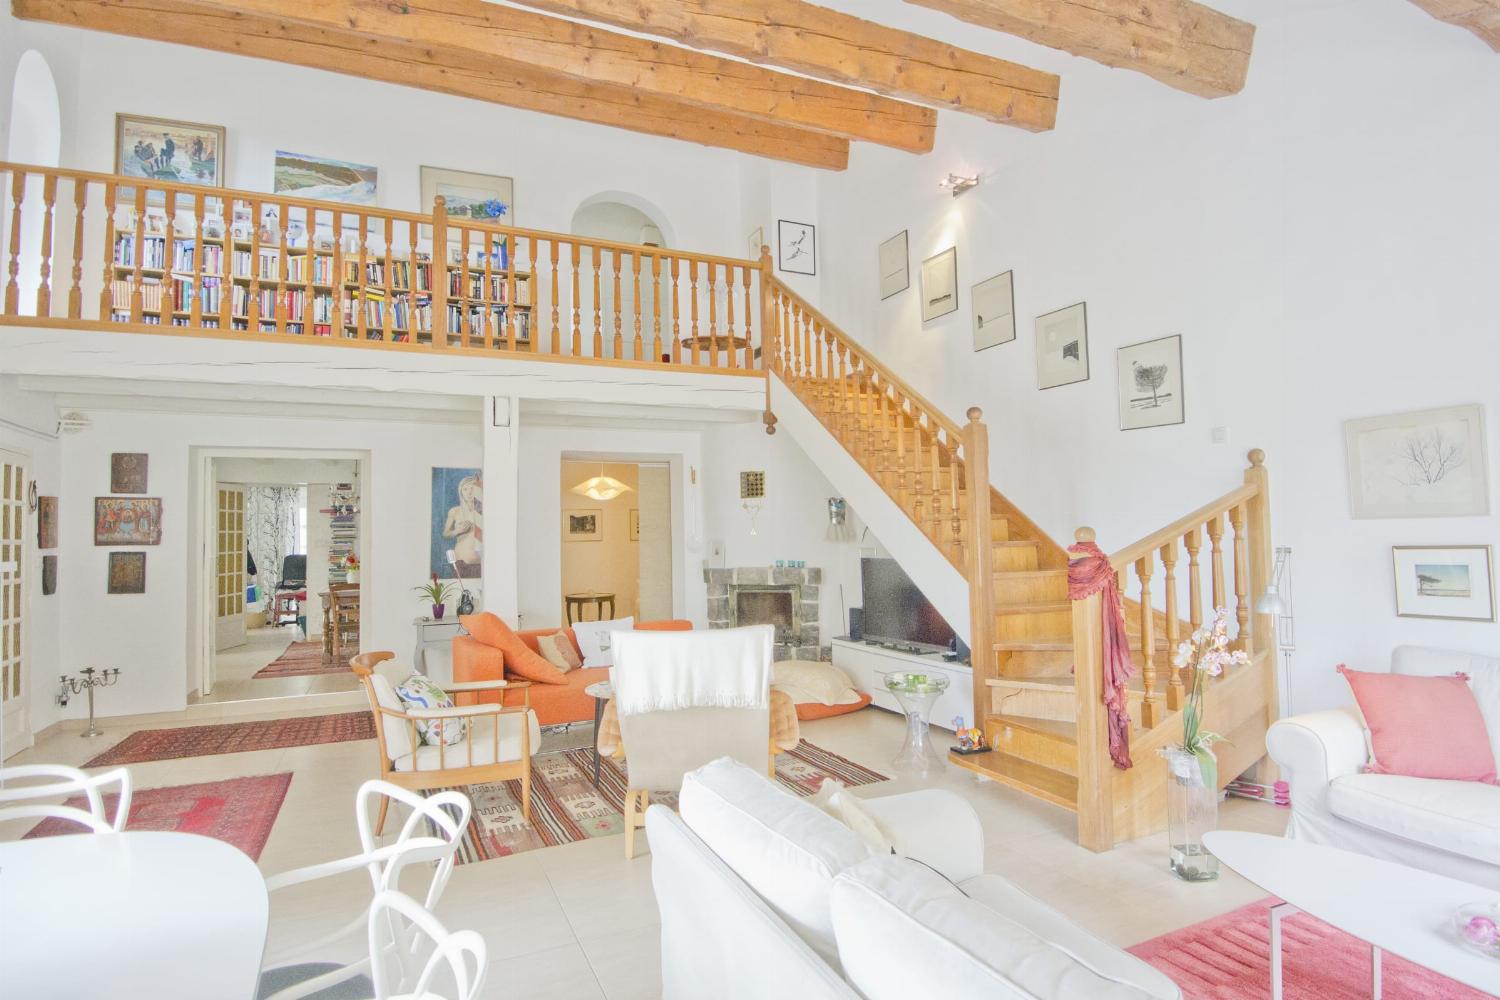 Living room | Rental villa in South of France